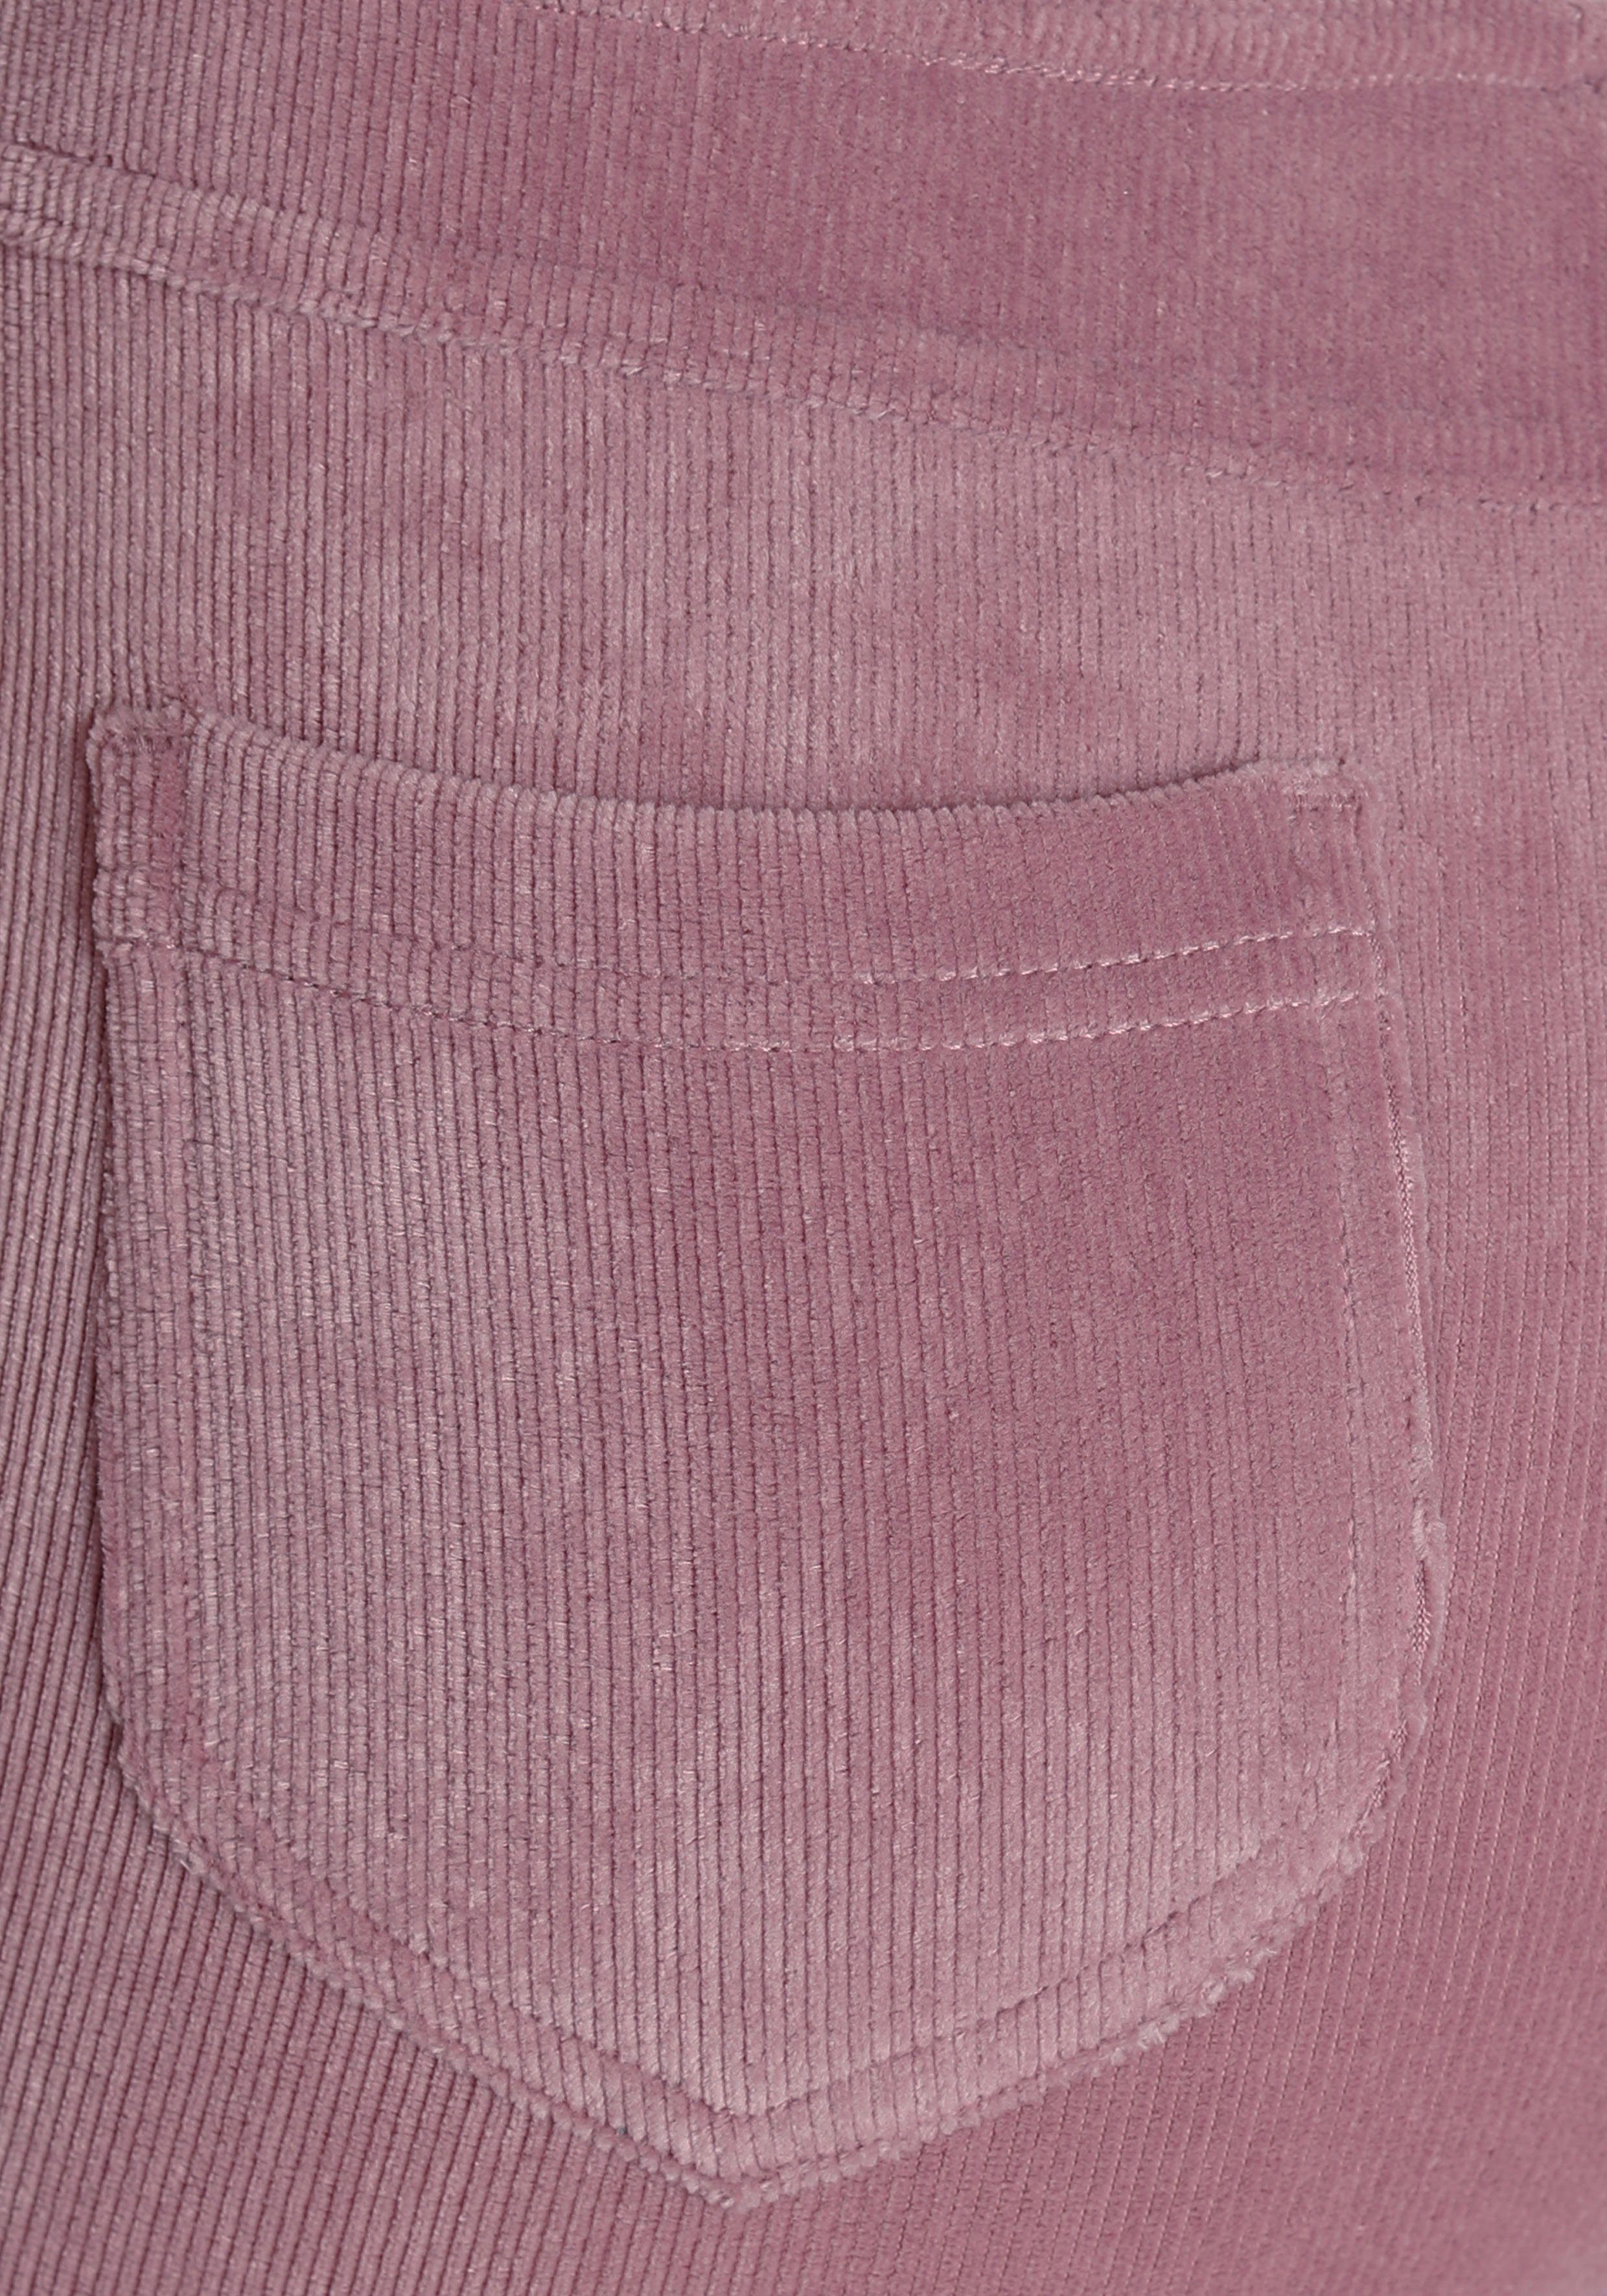 Loungewear Material rosa Cord-Optik, weichem aus LASCANA in Jazzpants